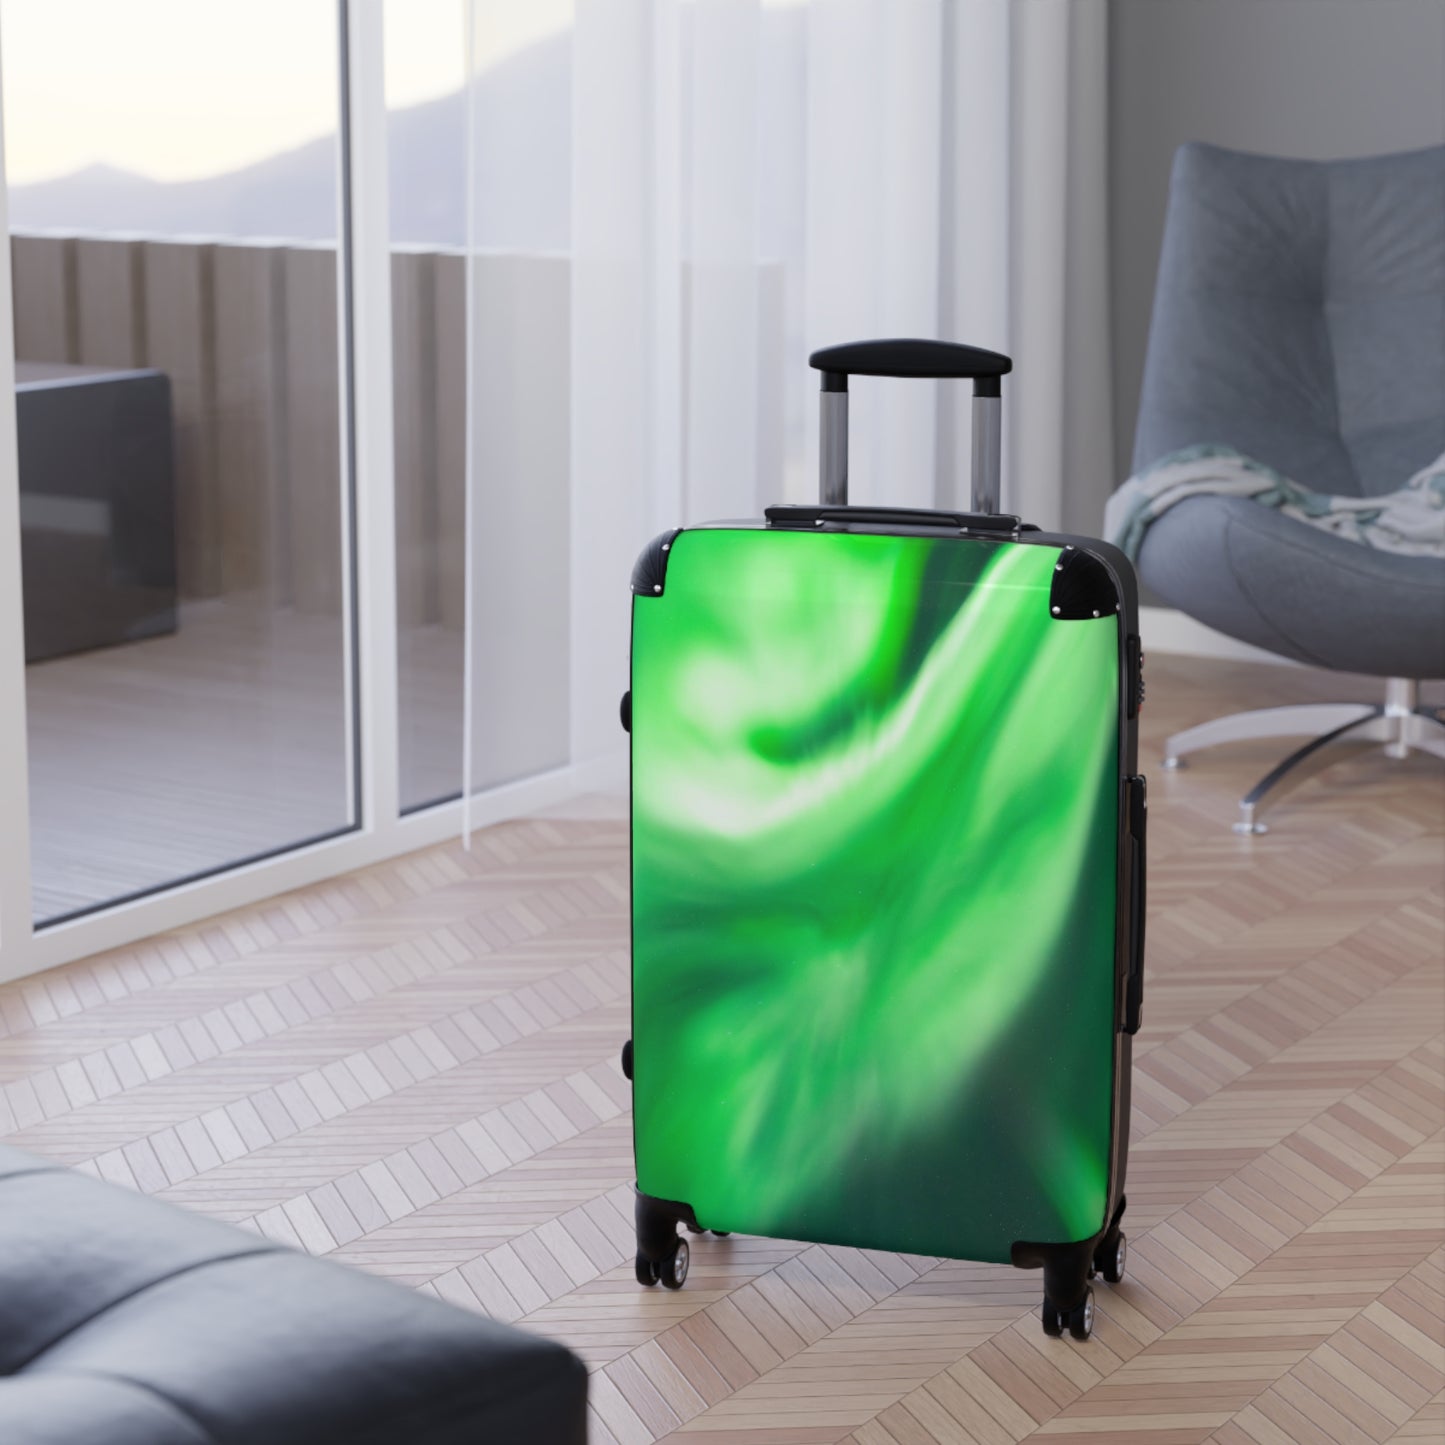 Aurora Borealis Corona Pattern Suitcase